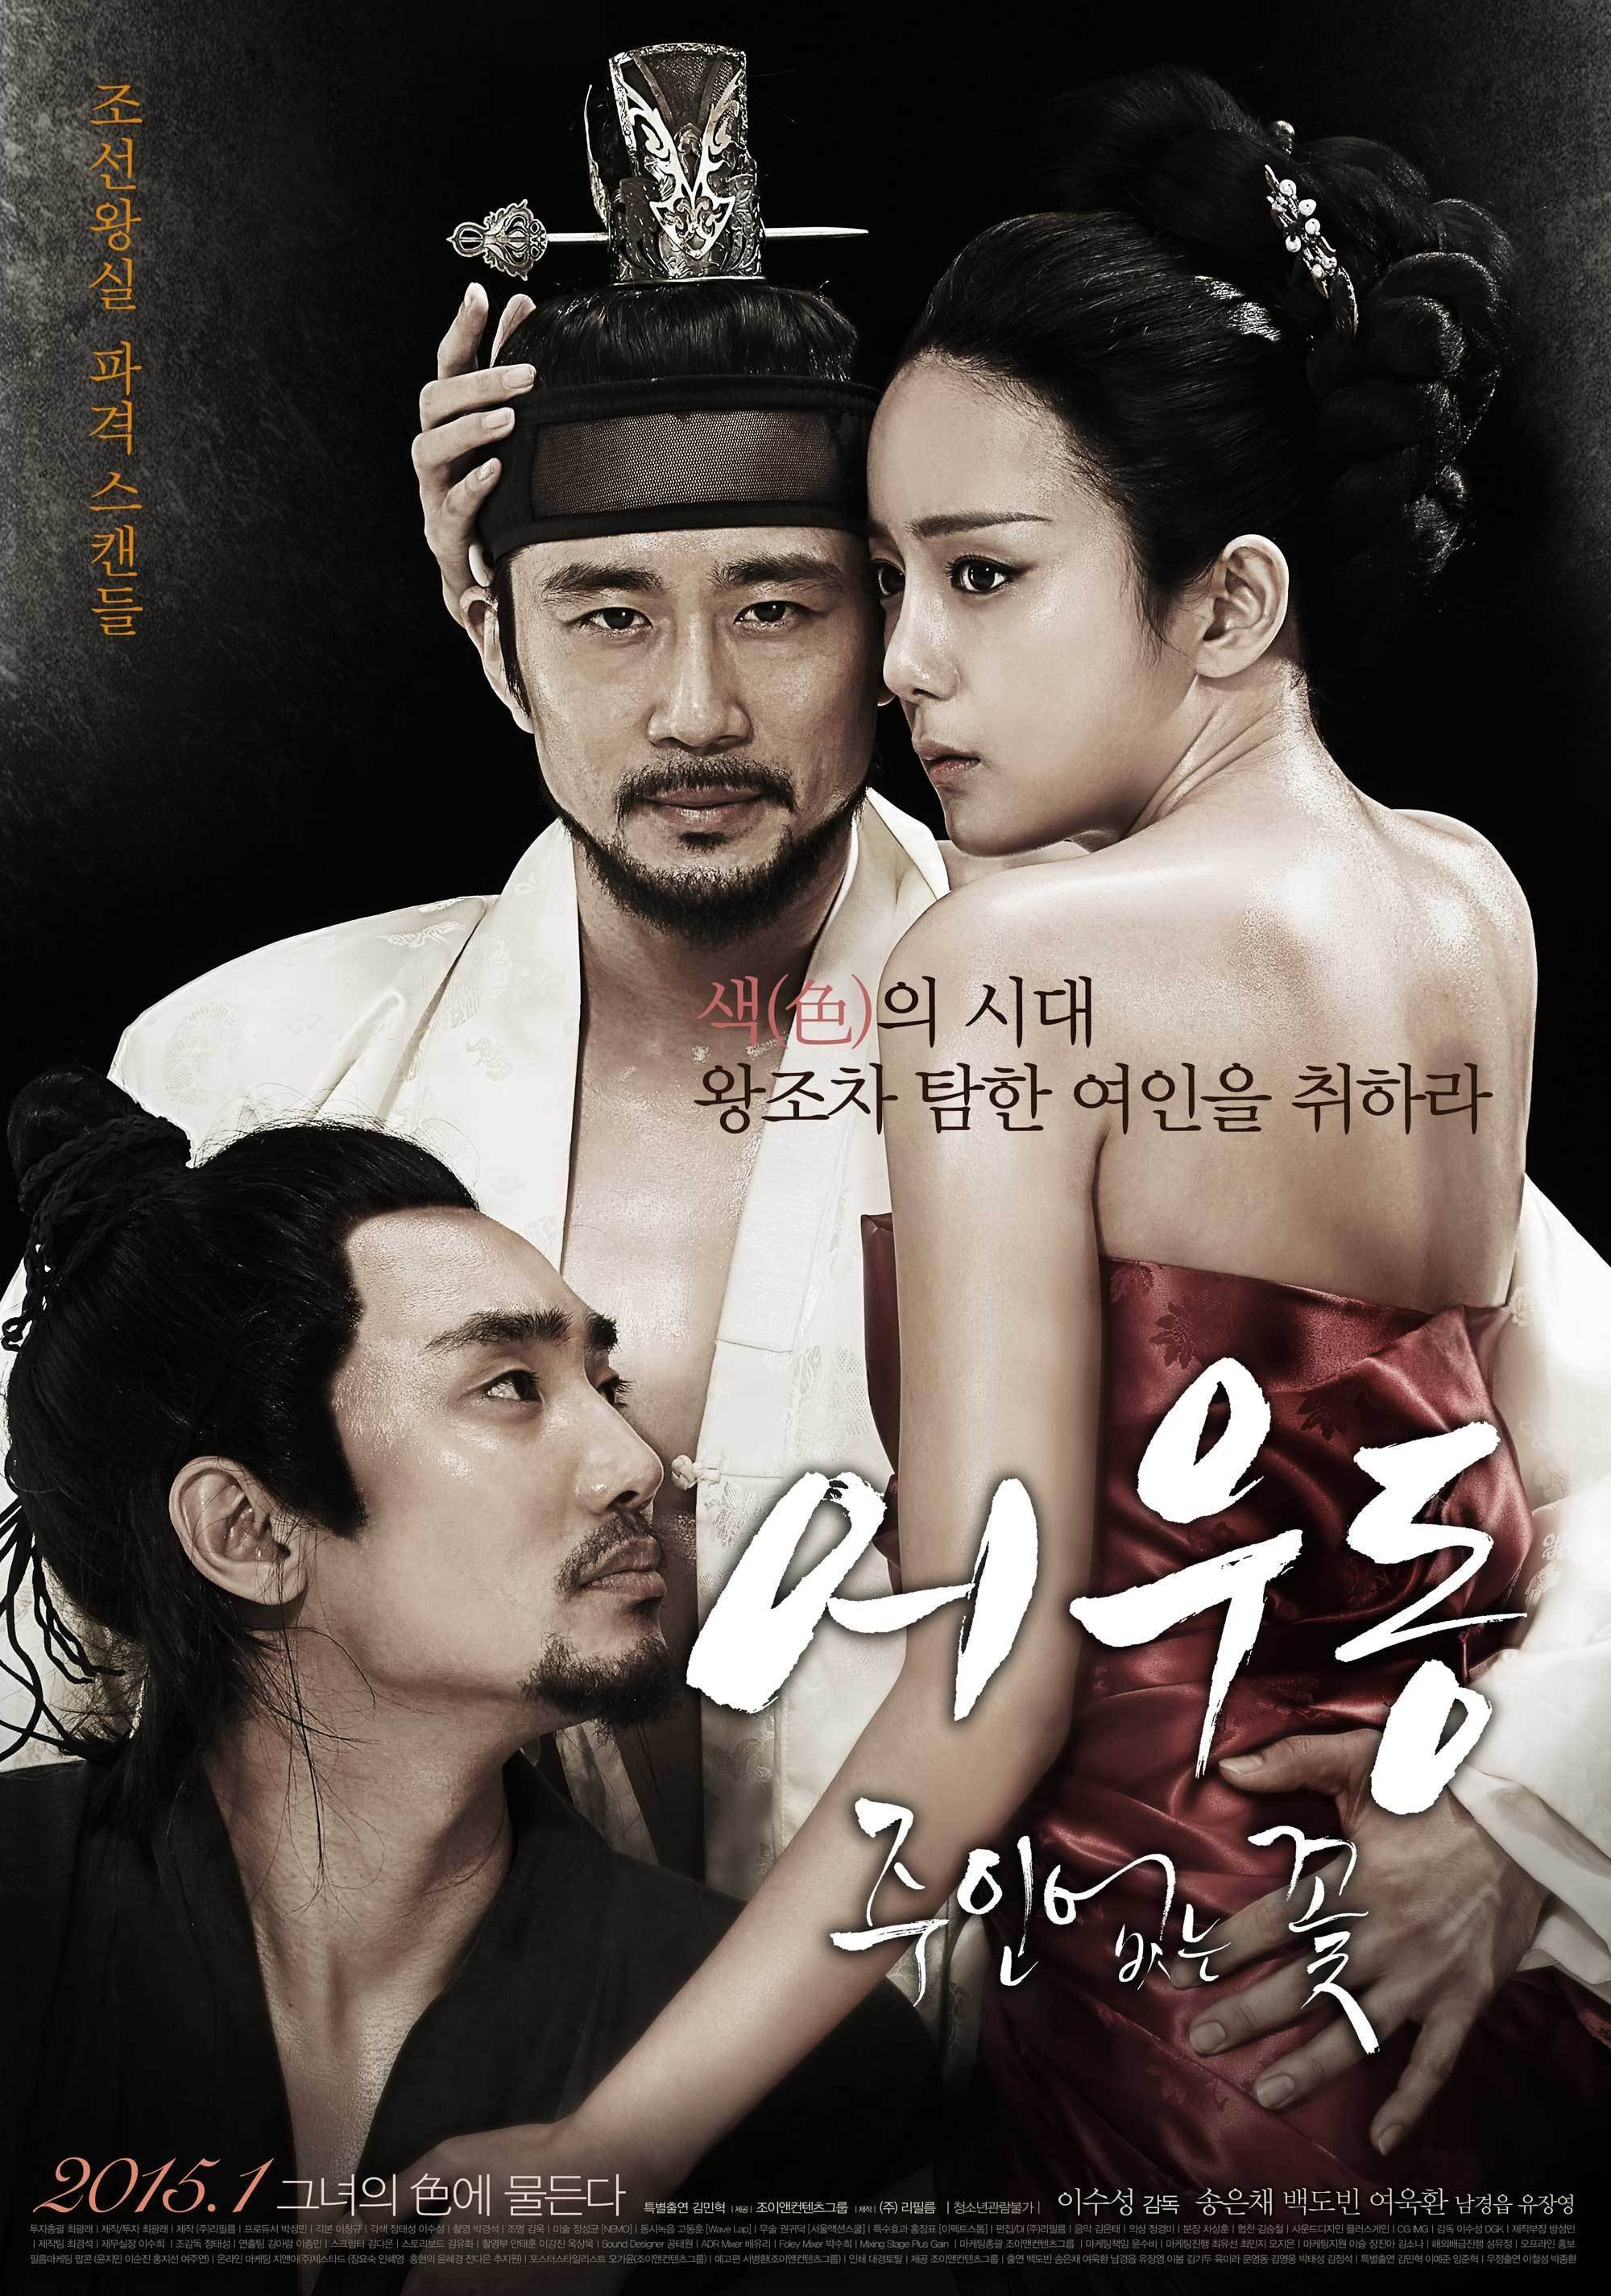 51 Best Photos The Client Movie Korean / Korean movies opening today 2014/04/17 in Korea ...